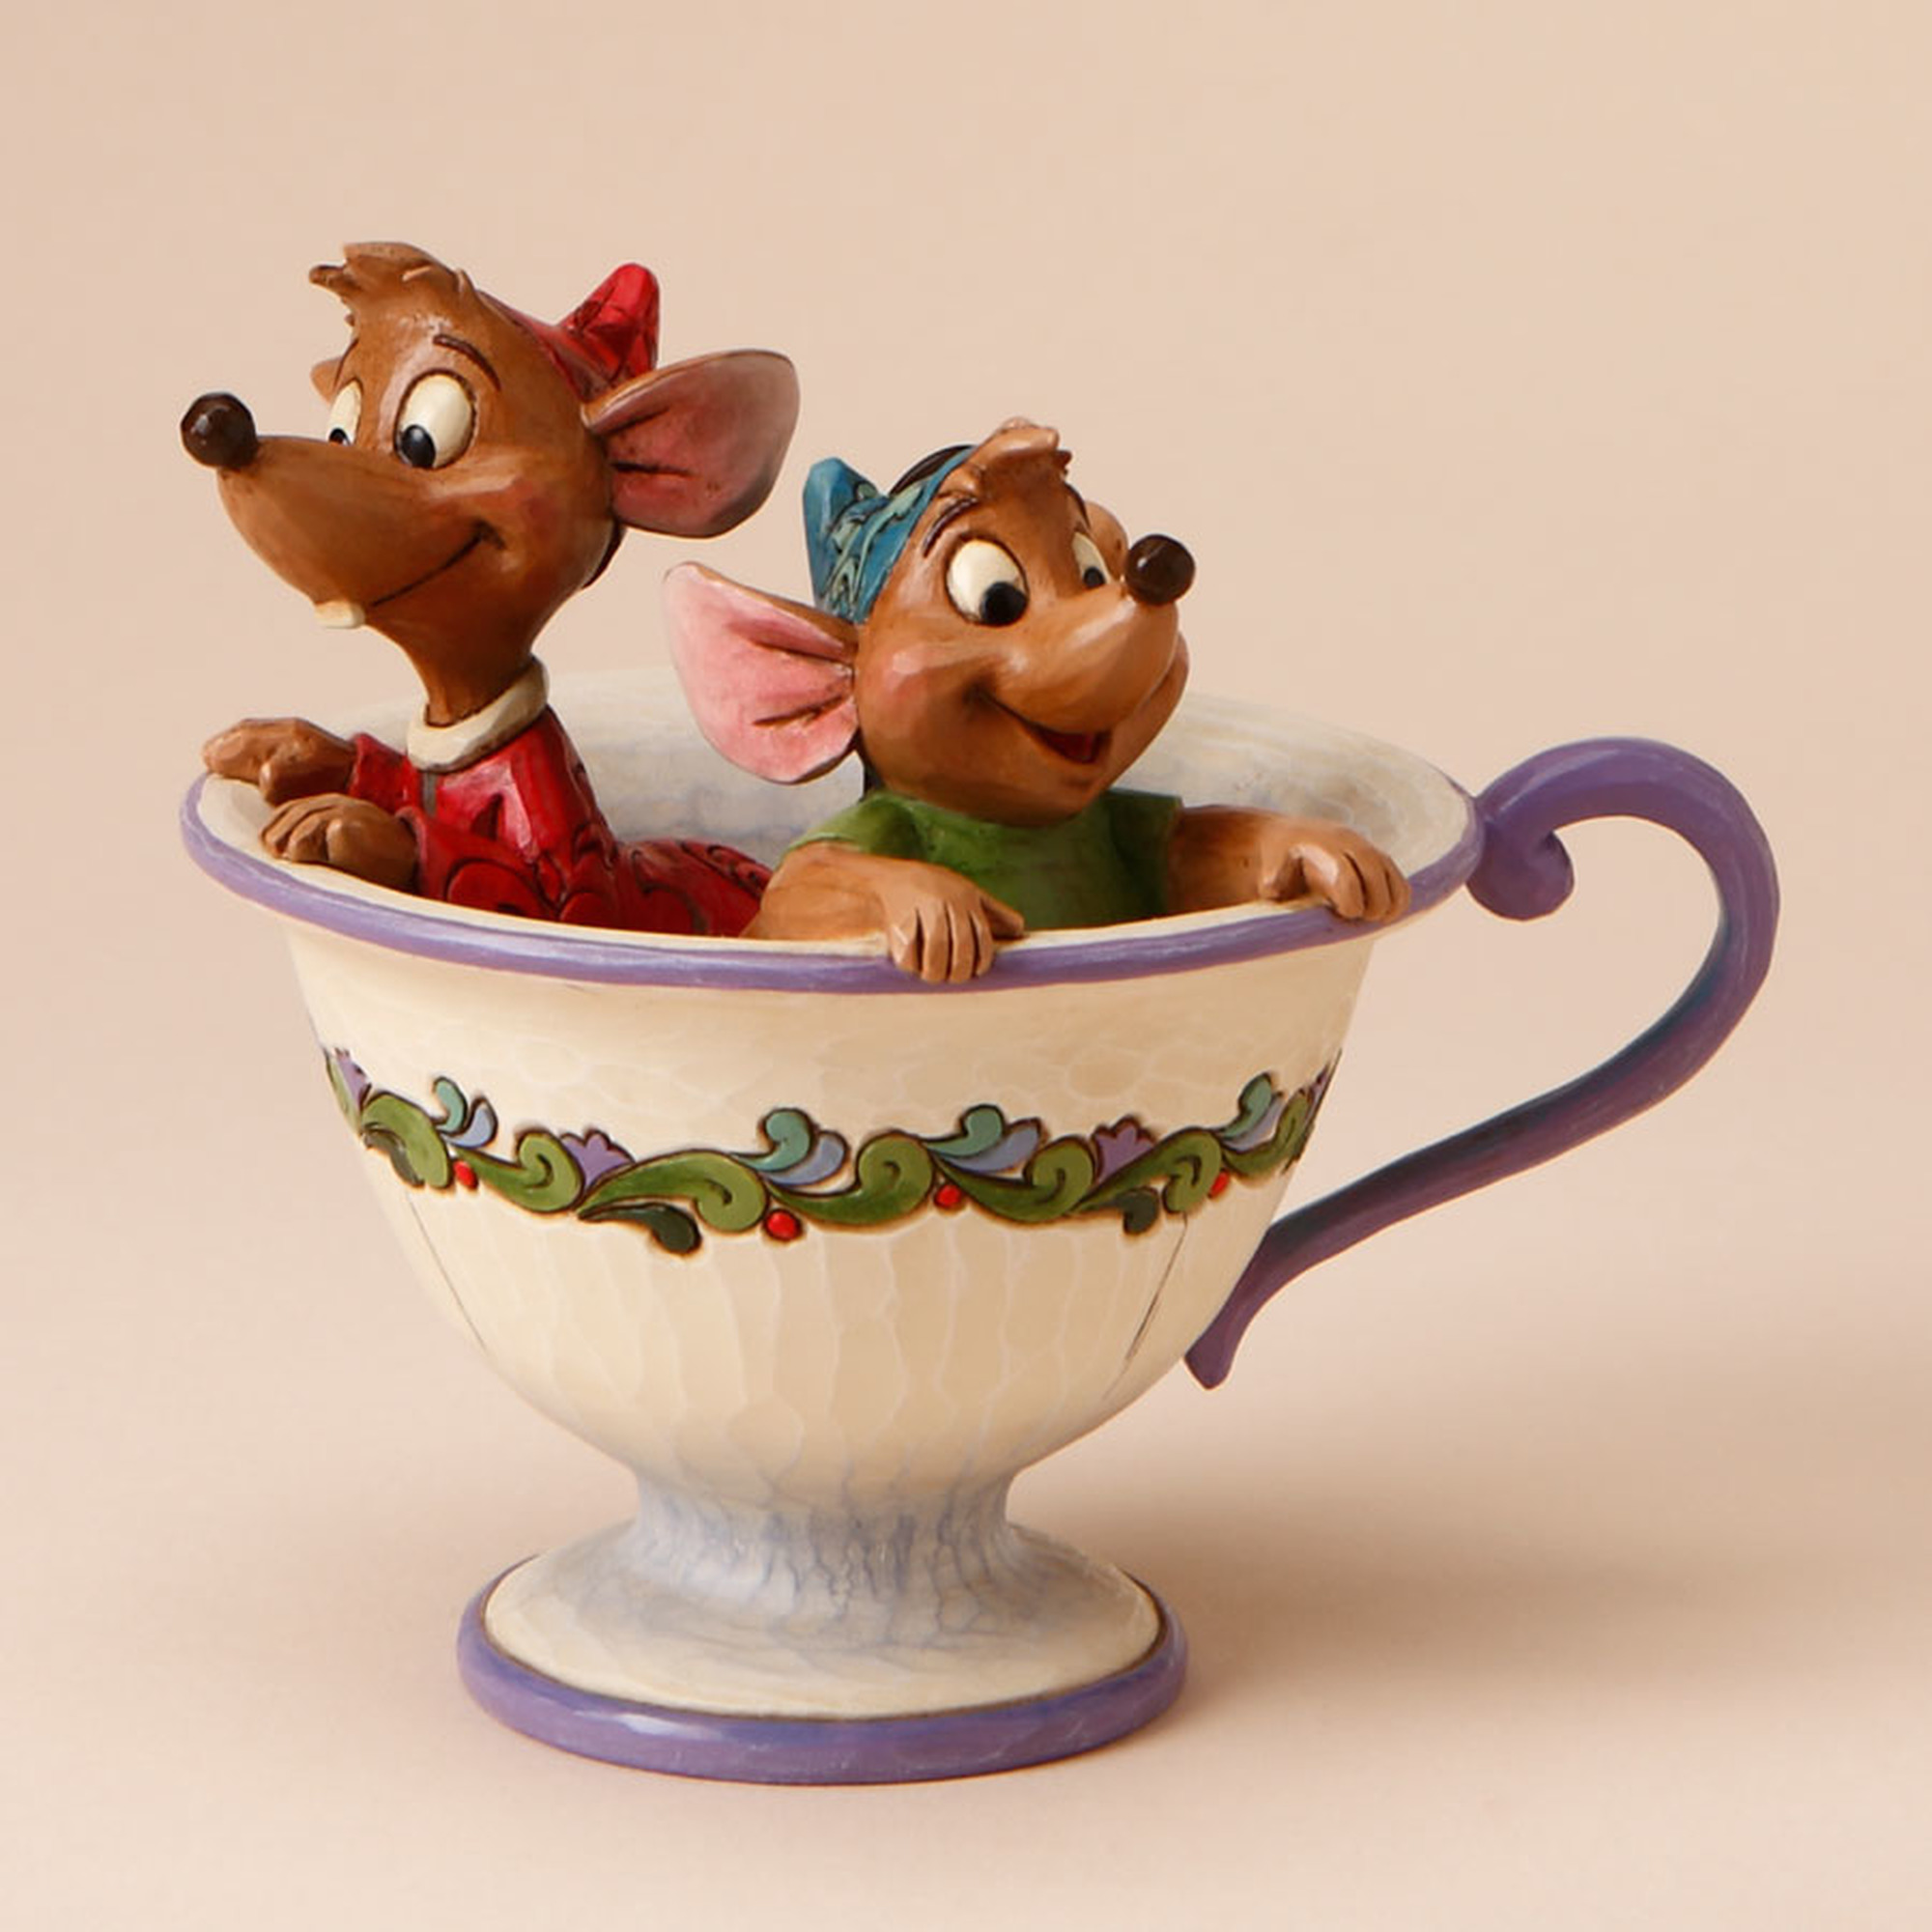 Disney Traditions Jim Shore Gus & Jaq "Tea For Two" Figure 